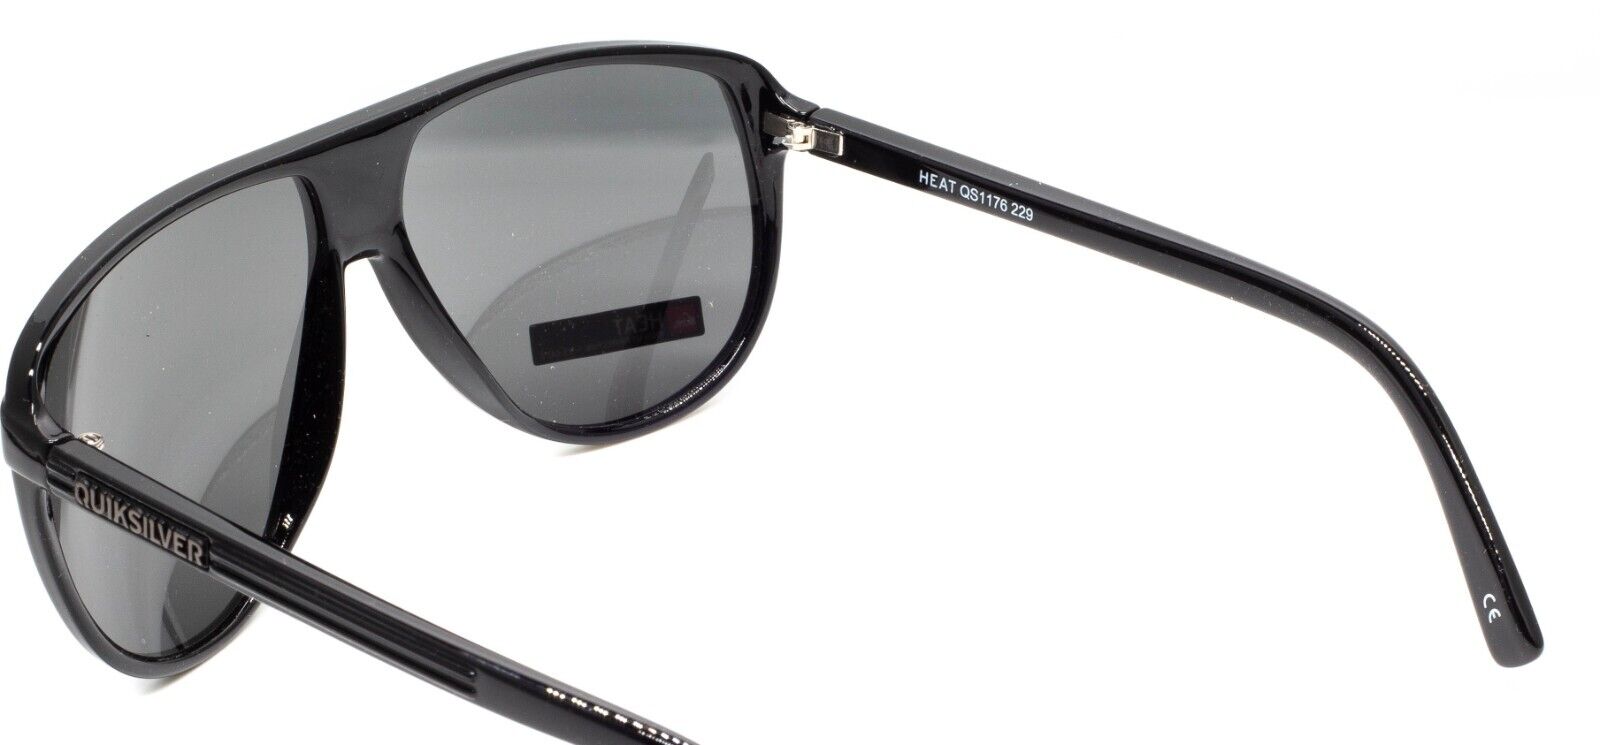 QUIKSILVER HEAT QS1176 229 4231441 - Eyewear 59mm Shades Sunglasses Eyewear -Italy Glasses GGV